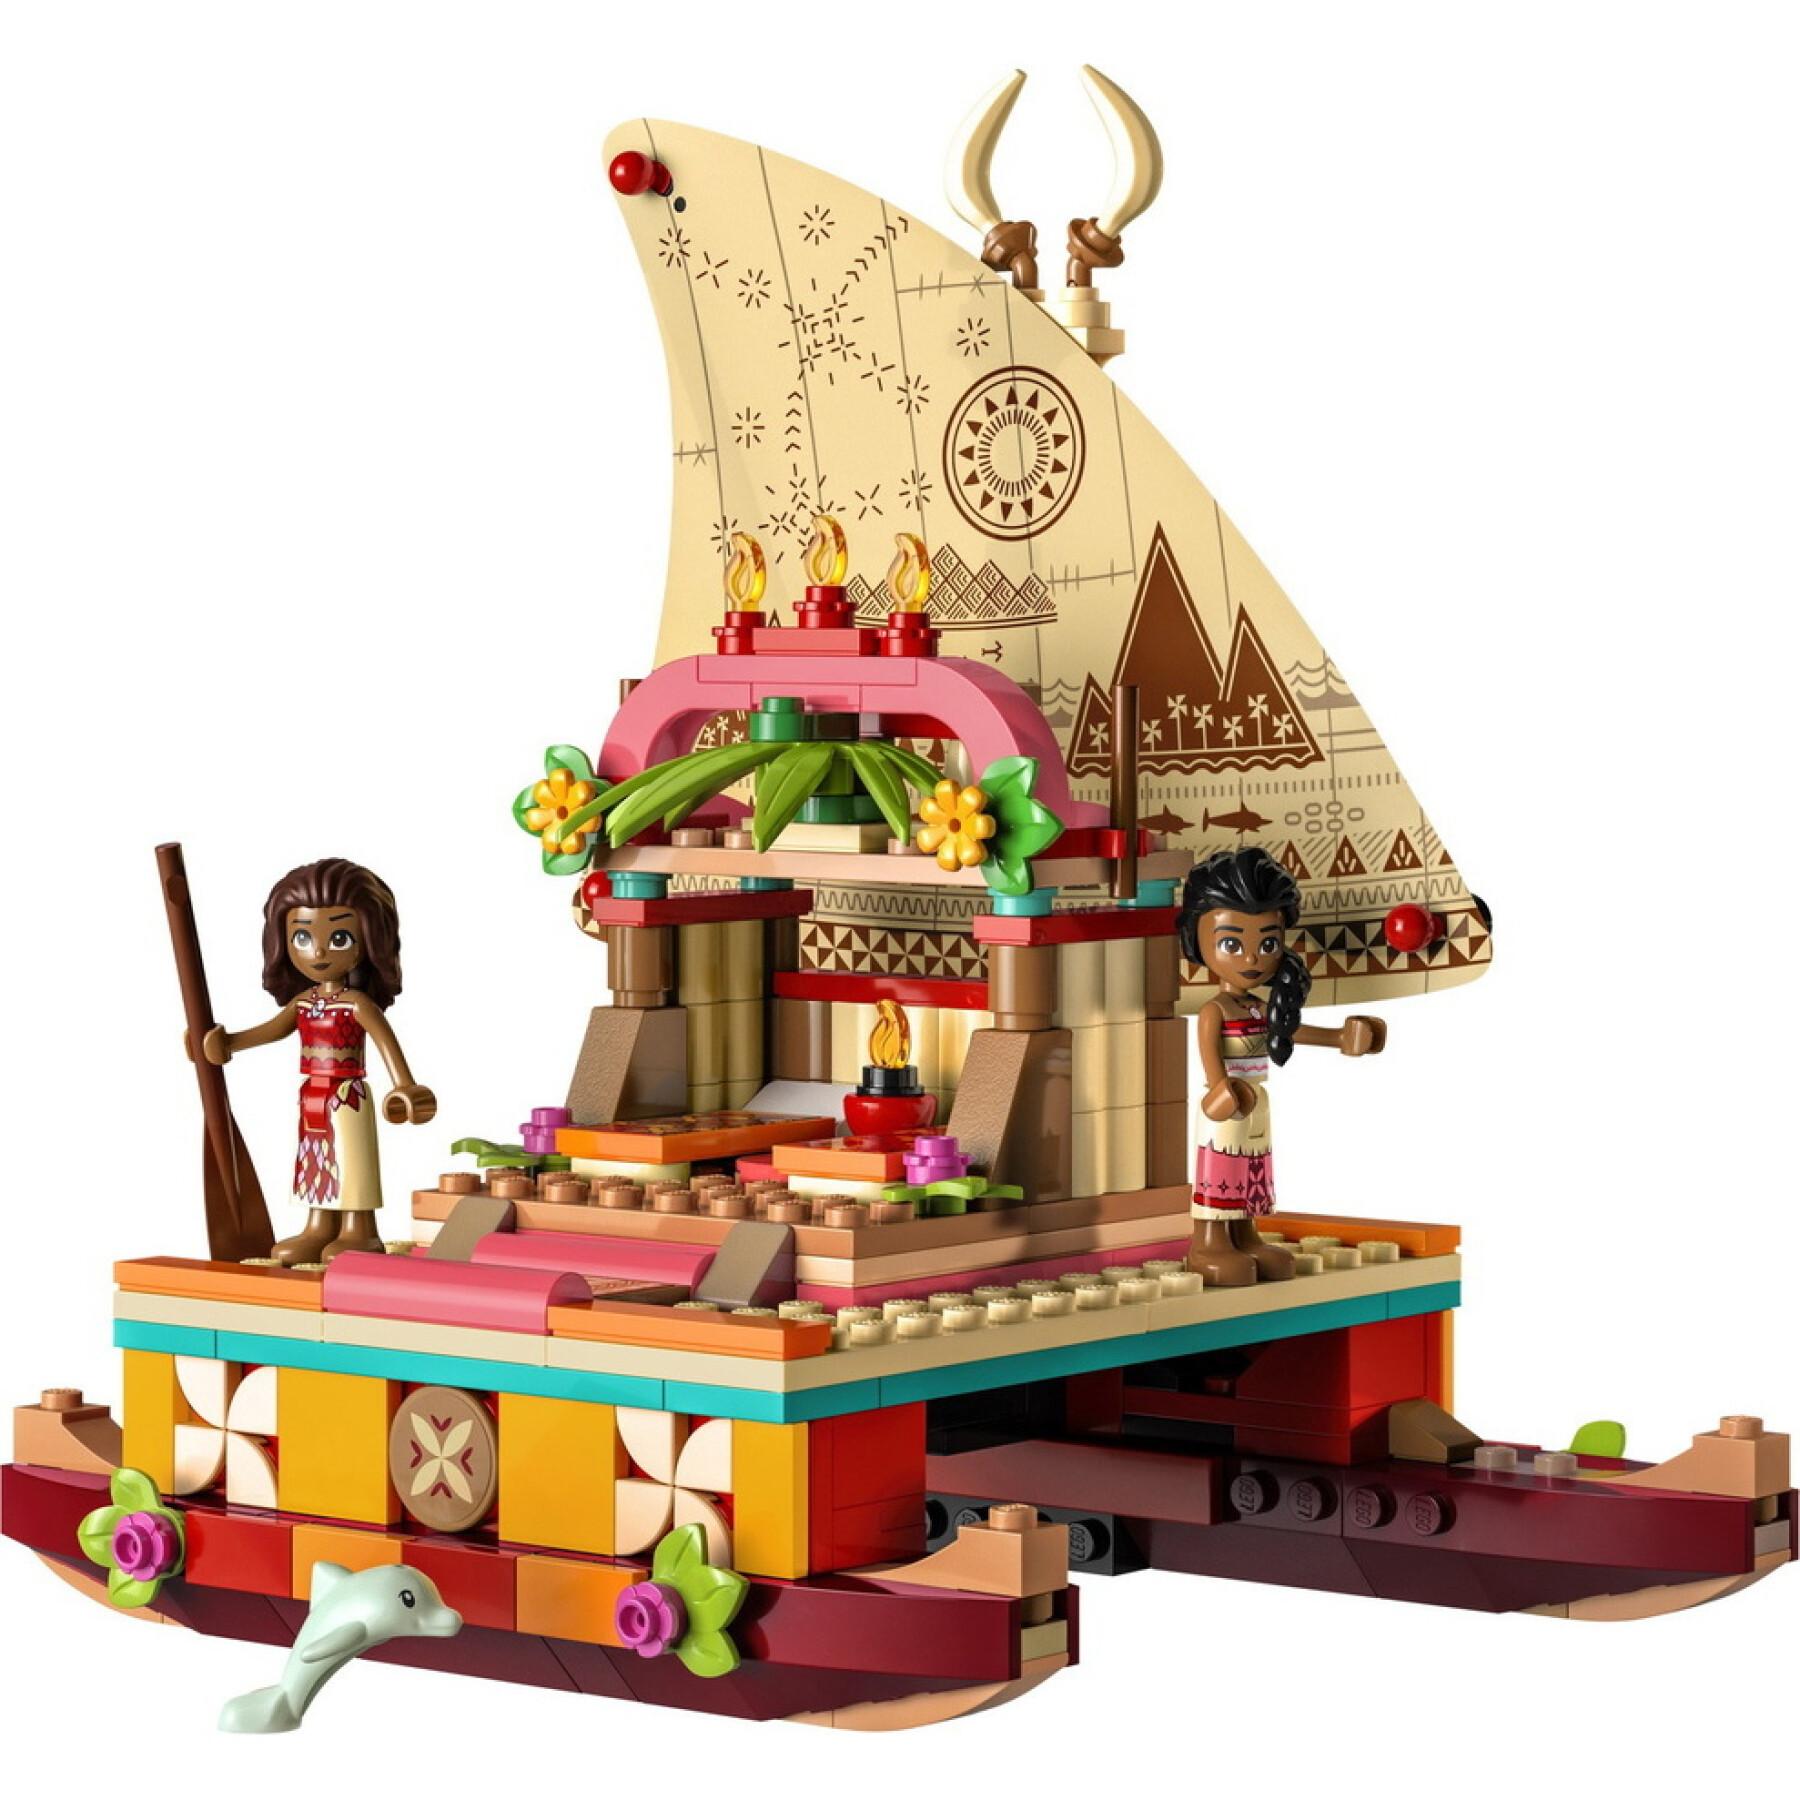 barco de exploración vaiana Lego